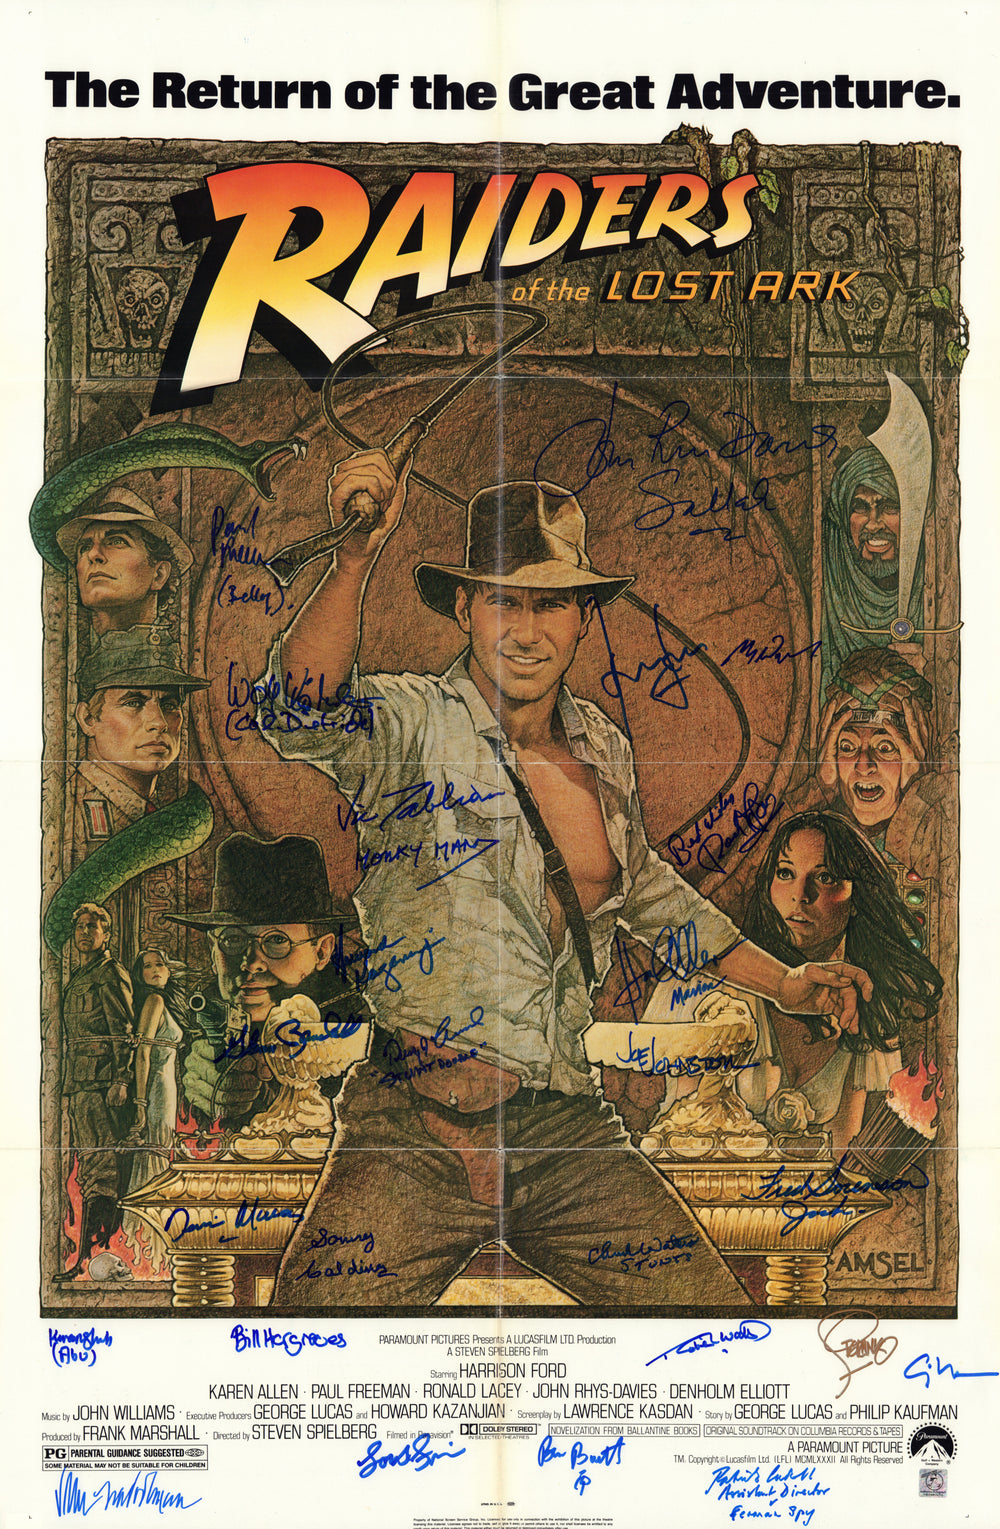 Indiana Jones and the Raiders of the Lost Ark 27x41 Poster Cast Signed by Harrison Ford, Karen Allen, Paul Freeman, John Rhys-Davies, Wolf Kahler, Jim Steranko, Joe Johnston, & More